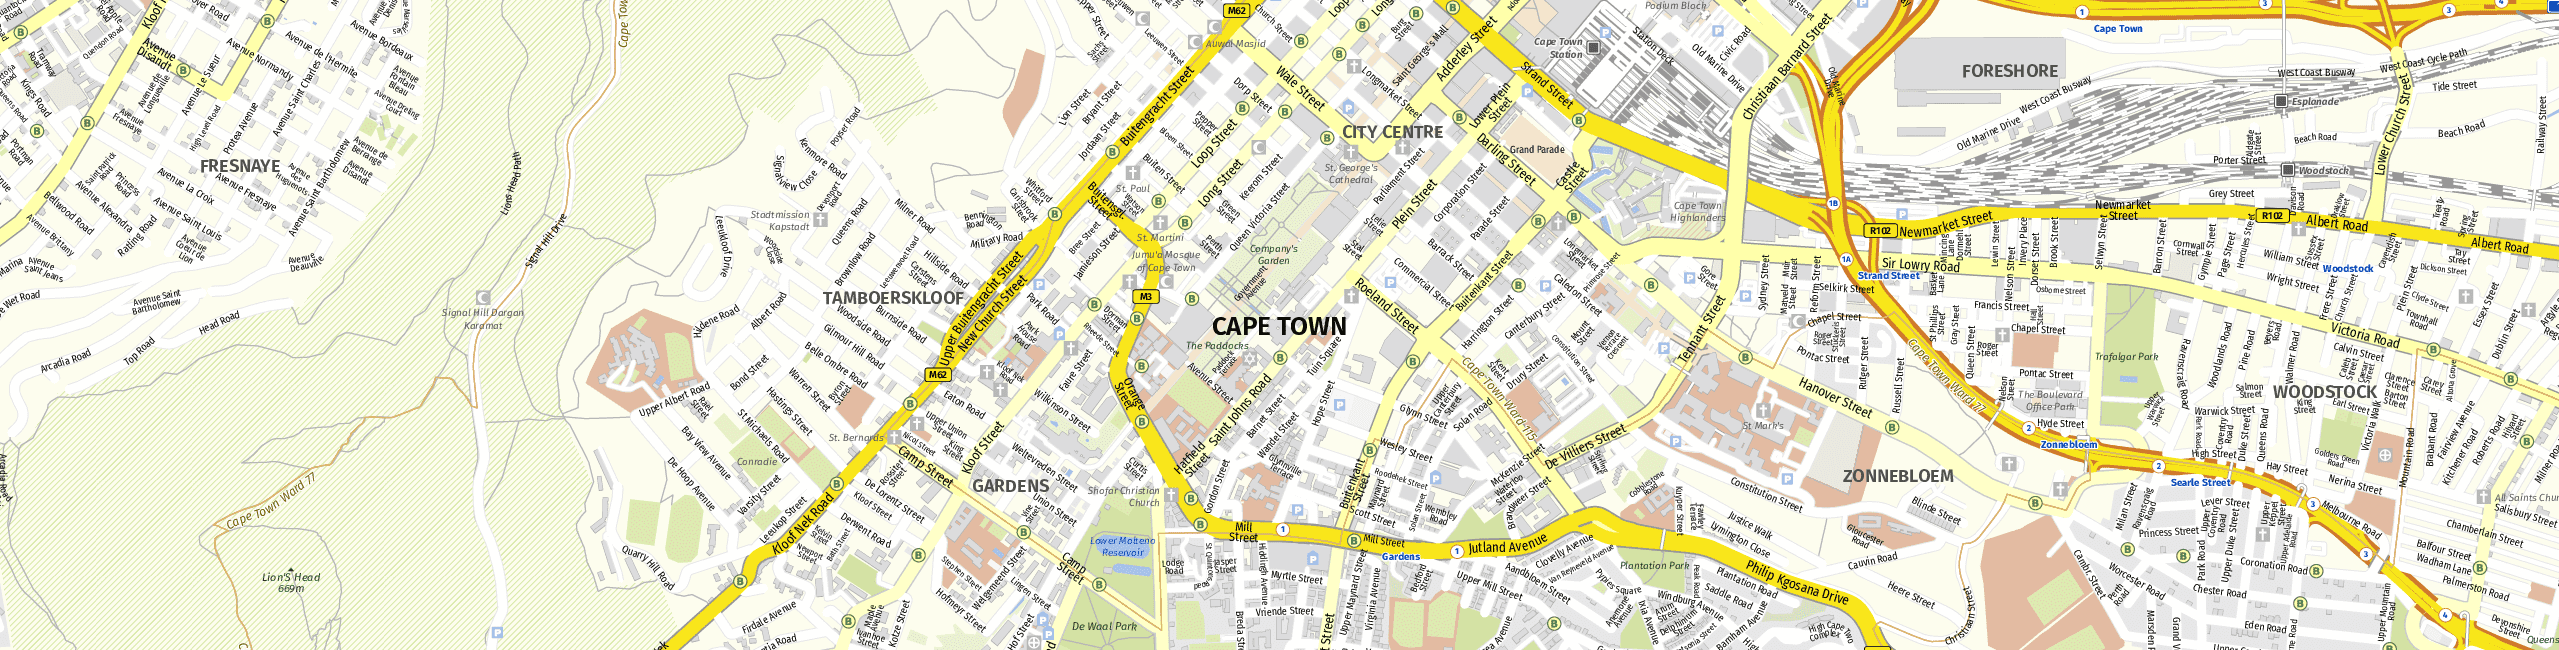 Stadtplan Kaapstad zum Downloaden.